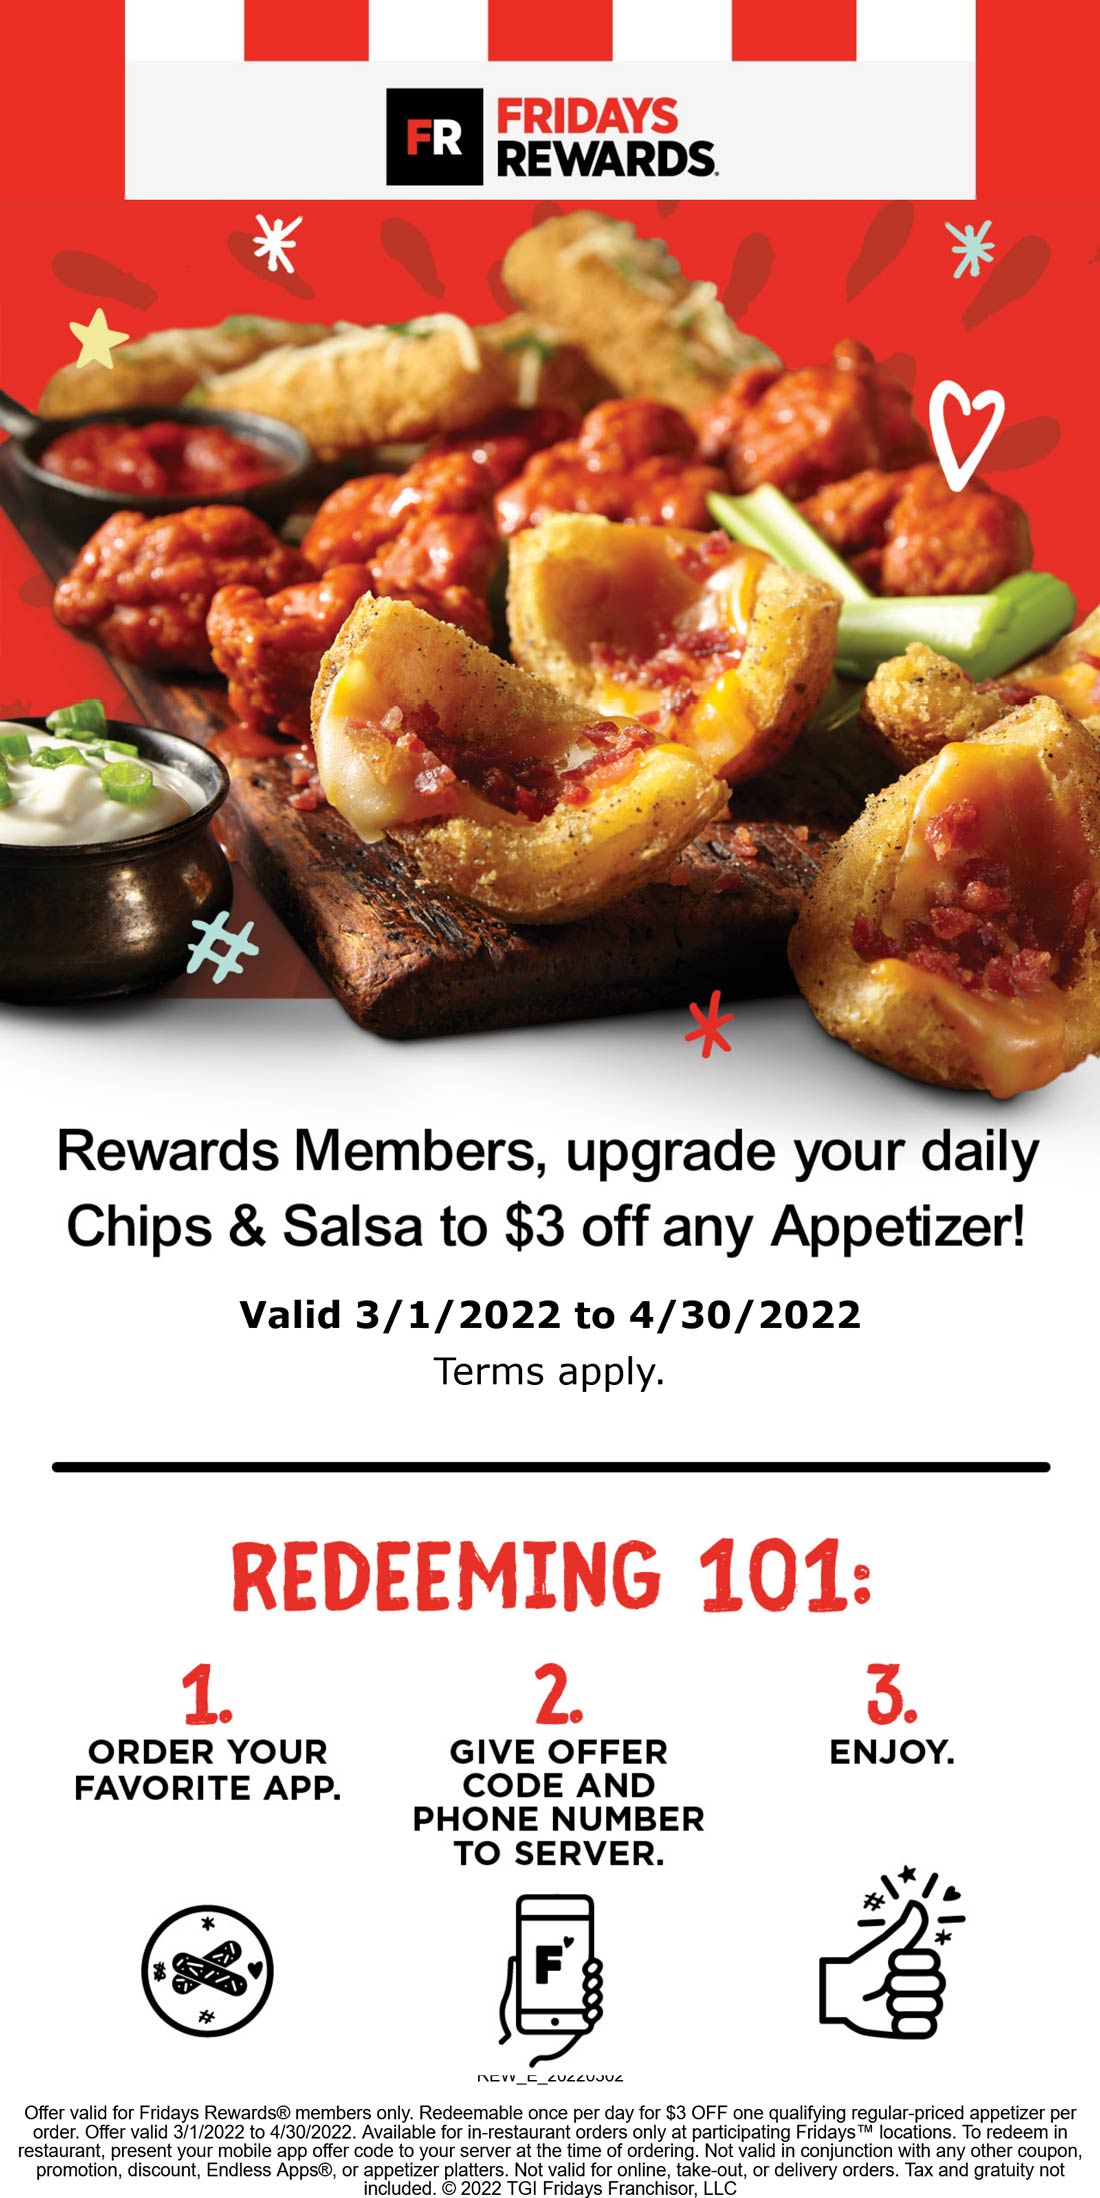 TGI Fridays restaurants Coupon  $3 off an appetizer daily for rewards at TGI Fridays #tgifridays 